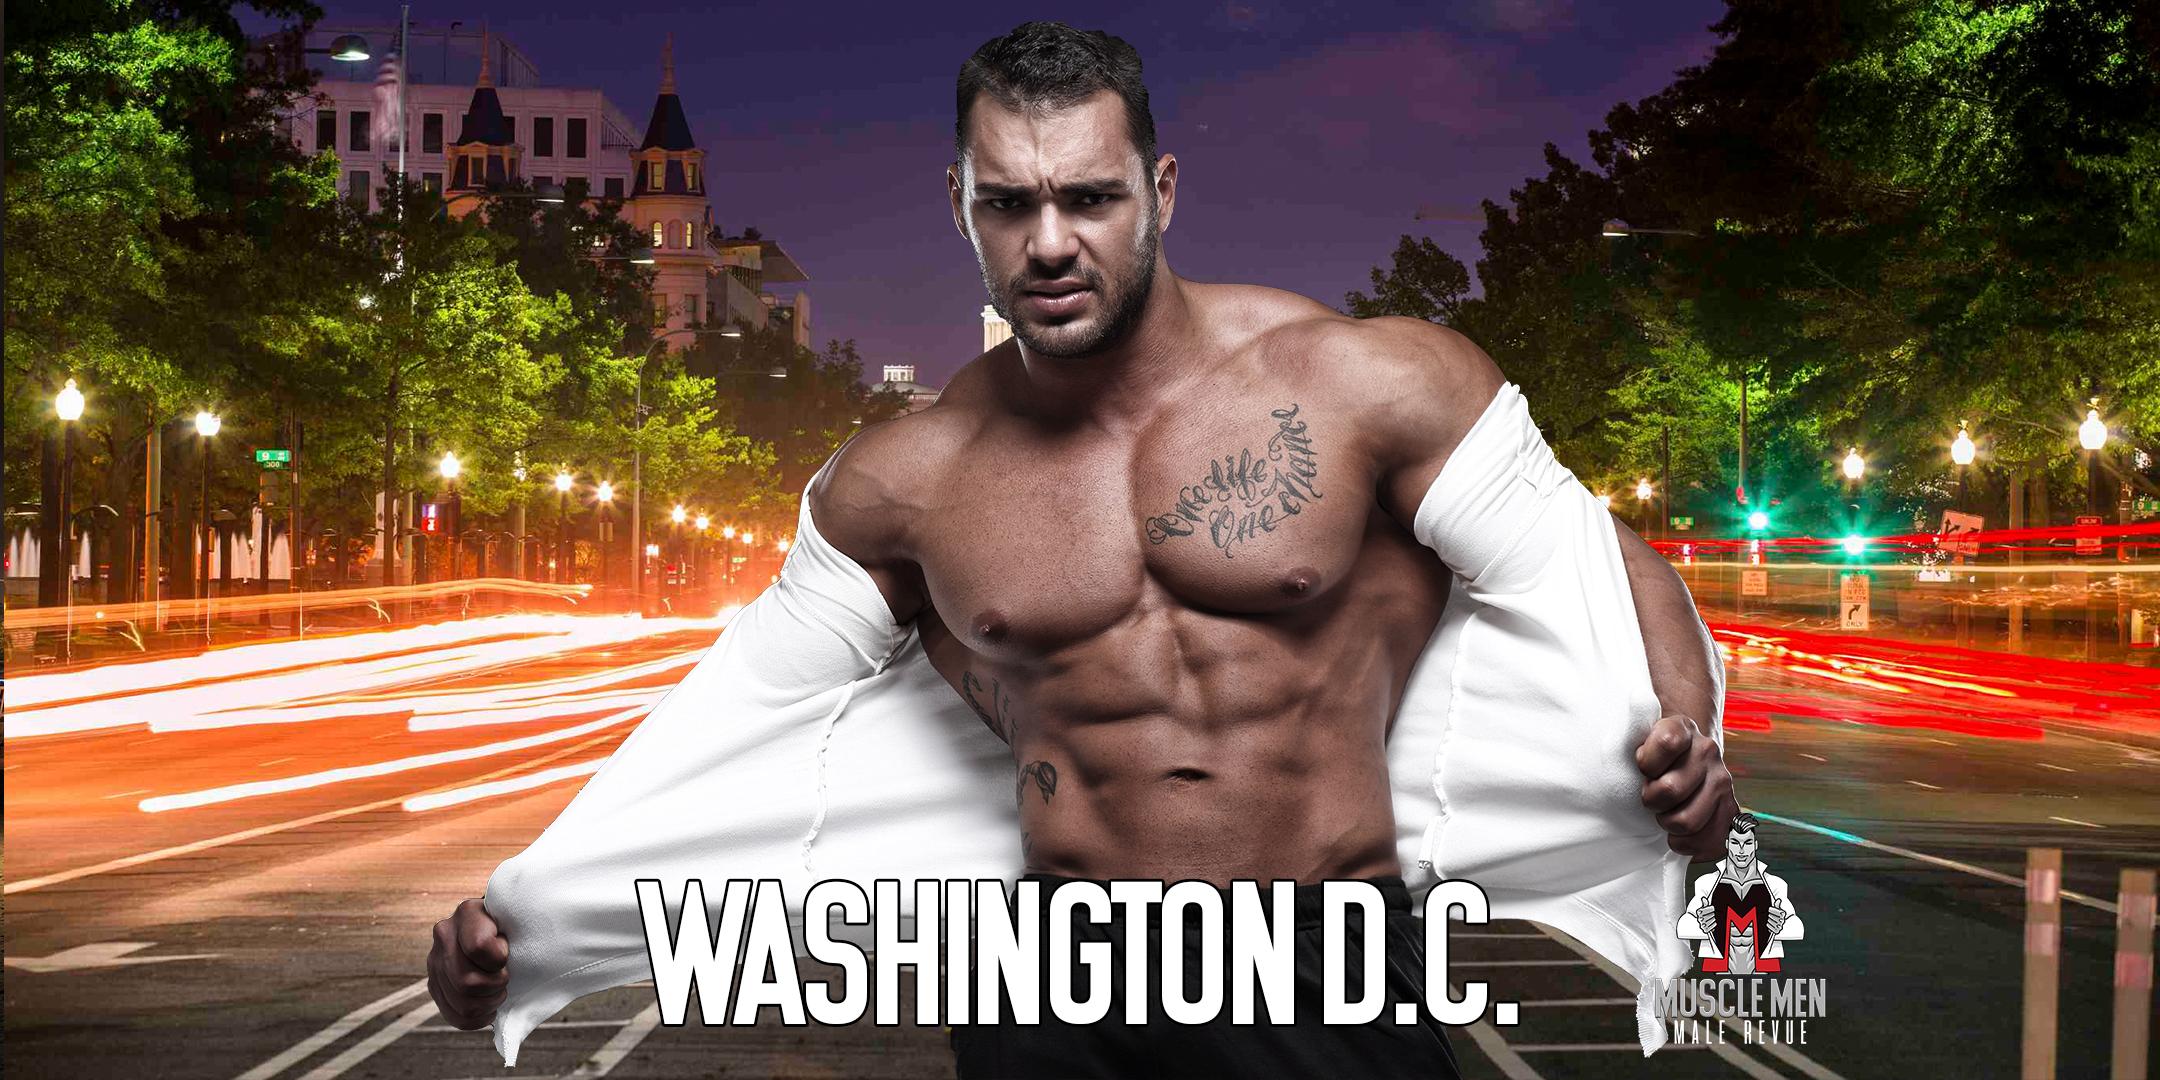 Muscle Men Male Strippers Revue & Male Strip Club Shows Washington DC 